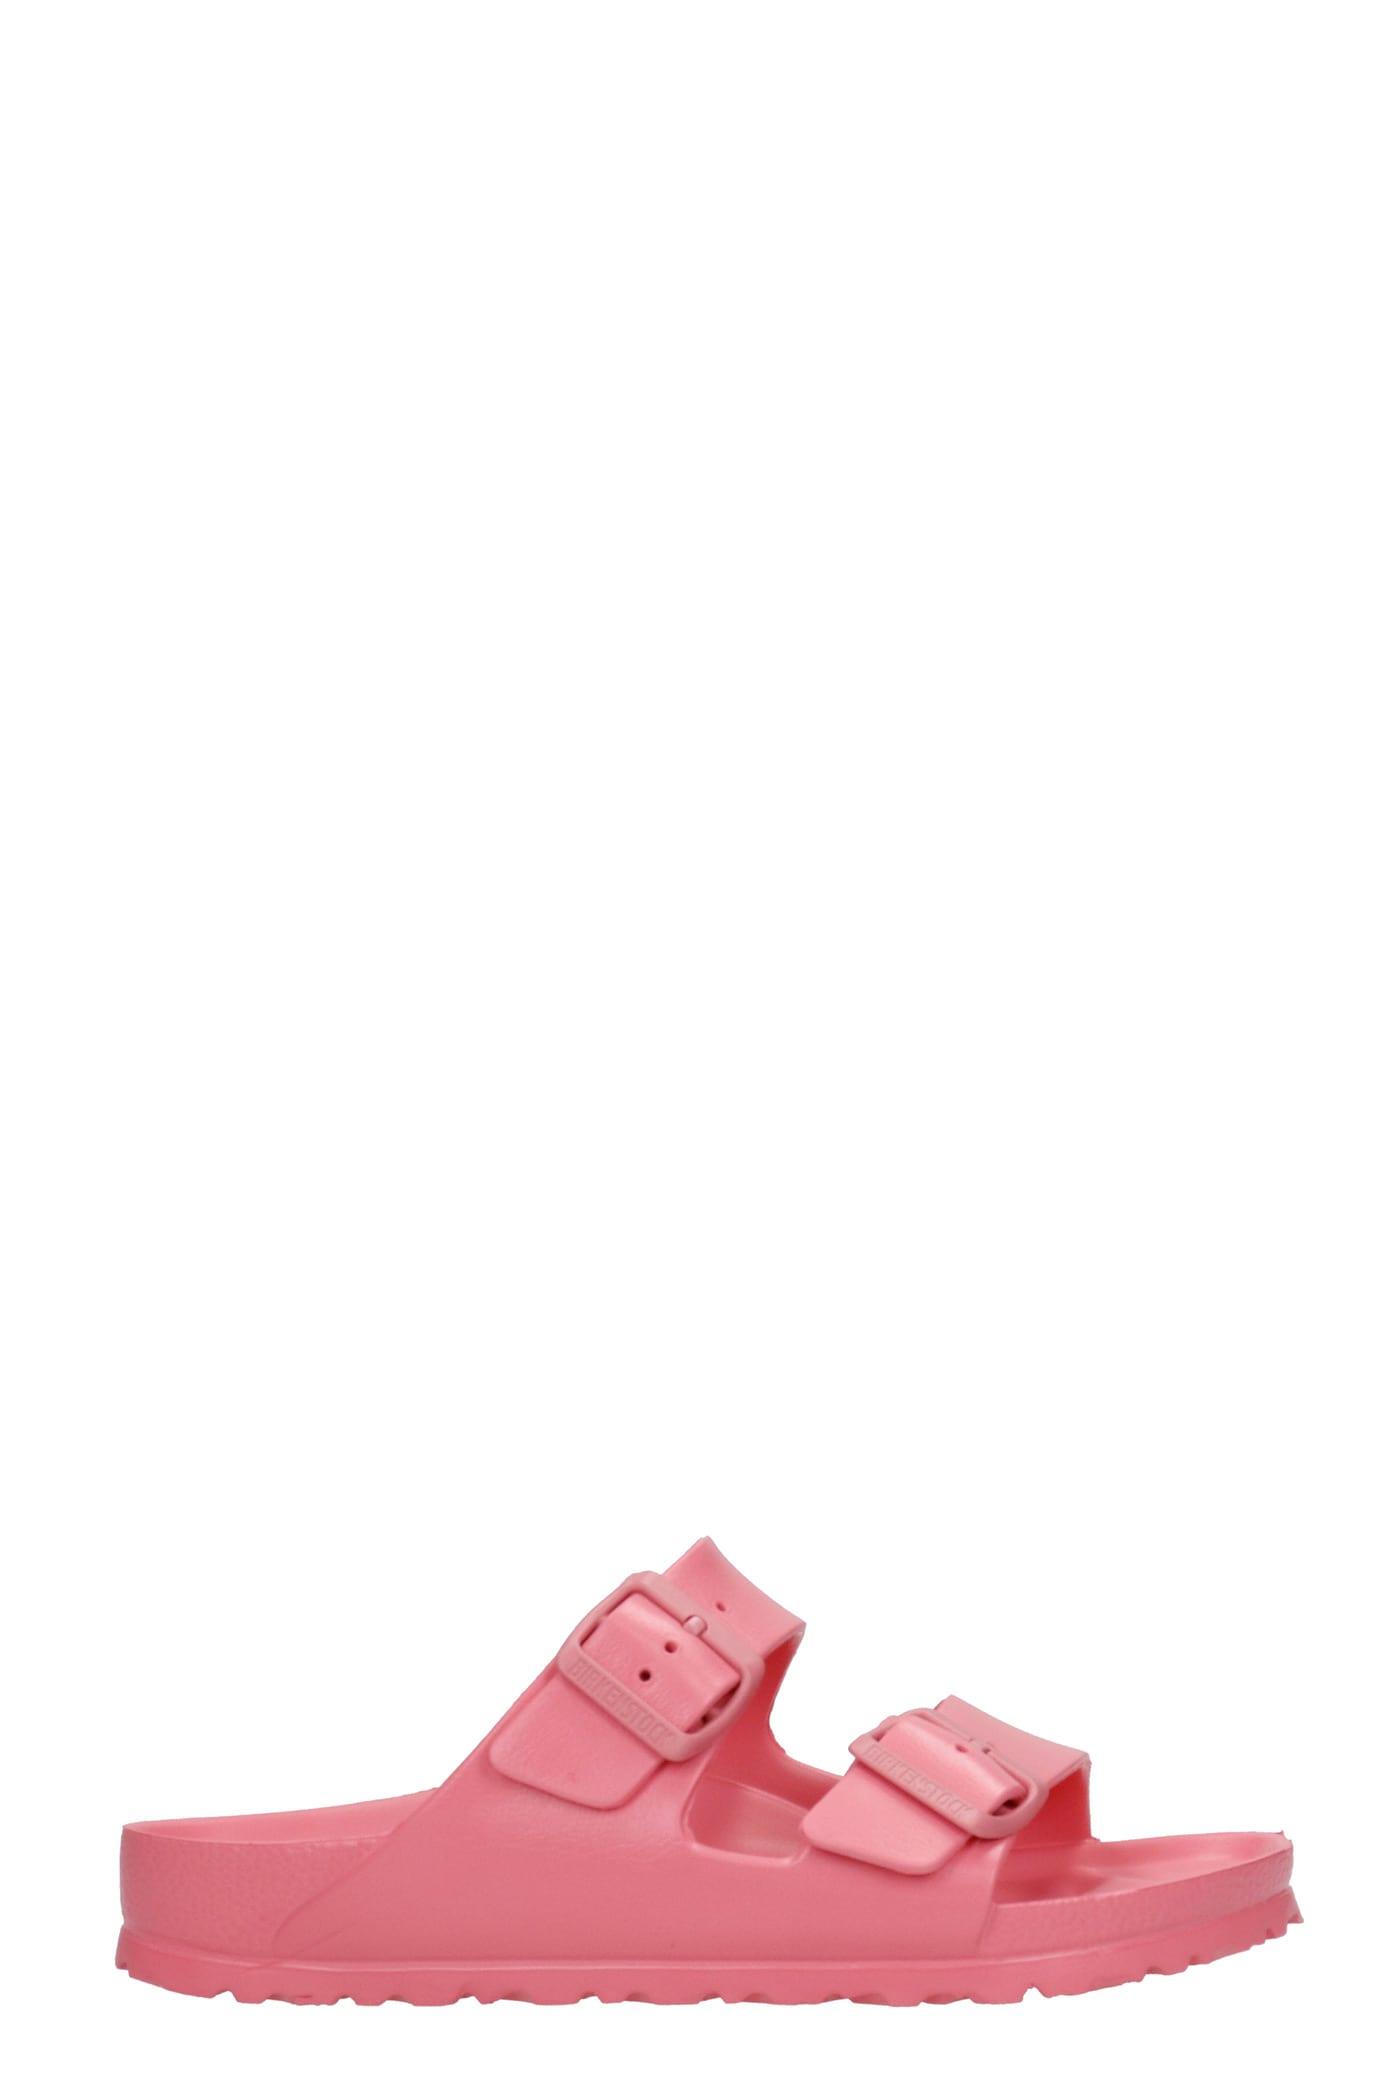 BIRKENSTOCK ARIZONA EVA FLATS IN ROSE-PINK RUBBER/PLASIC,1019522